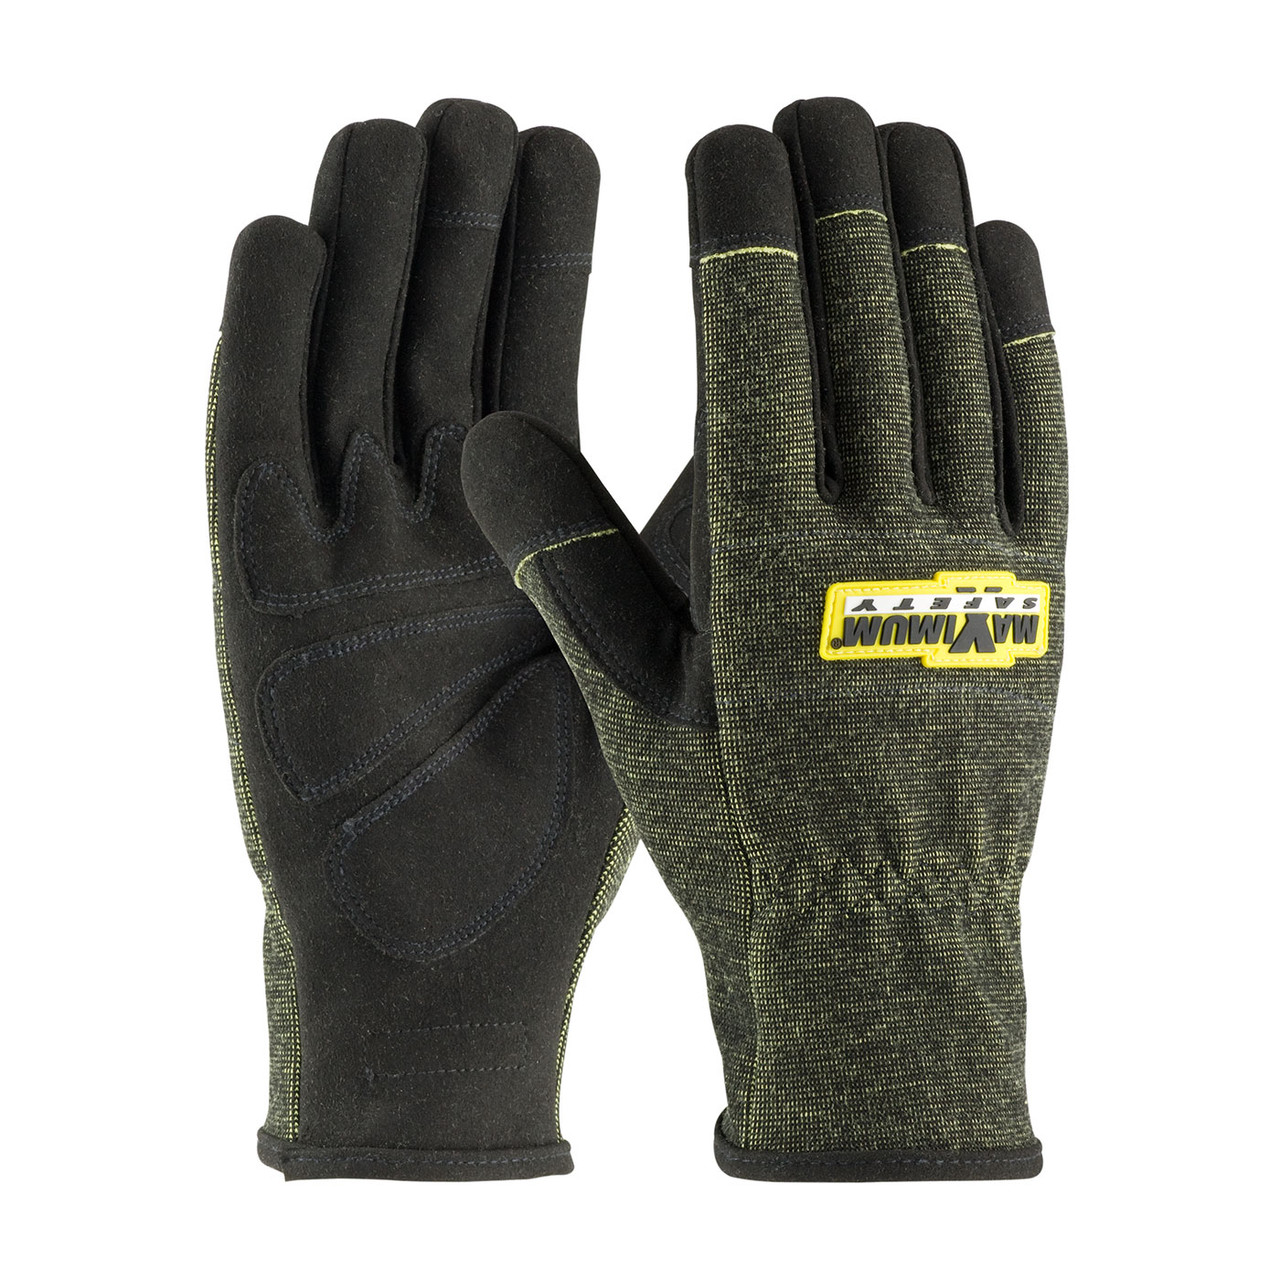 Kut Gard Seamless Knit ACP / DuPont Kevlar Blended Glove w/Polyester Lining  - Medium Weight - Green - 1/DZ - 07-KA730